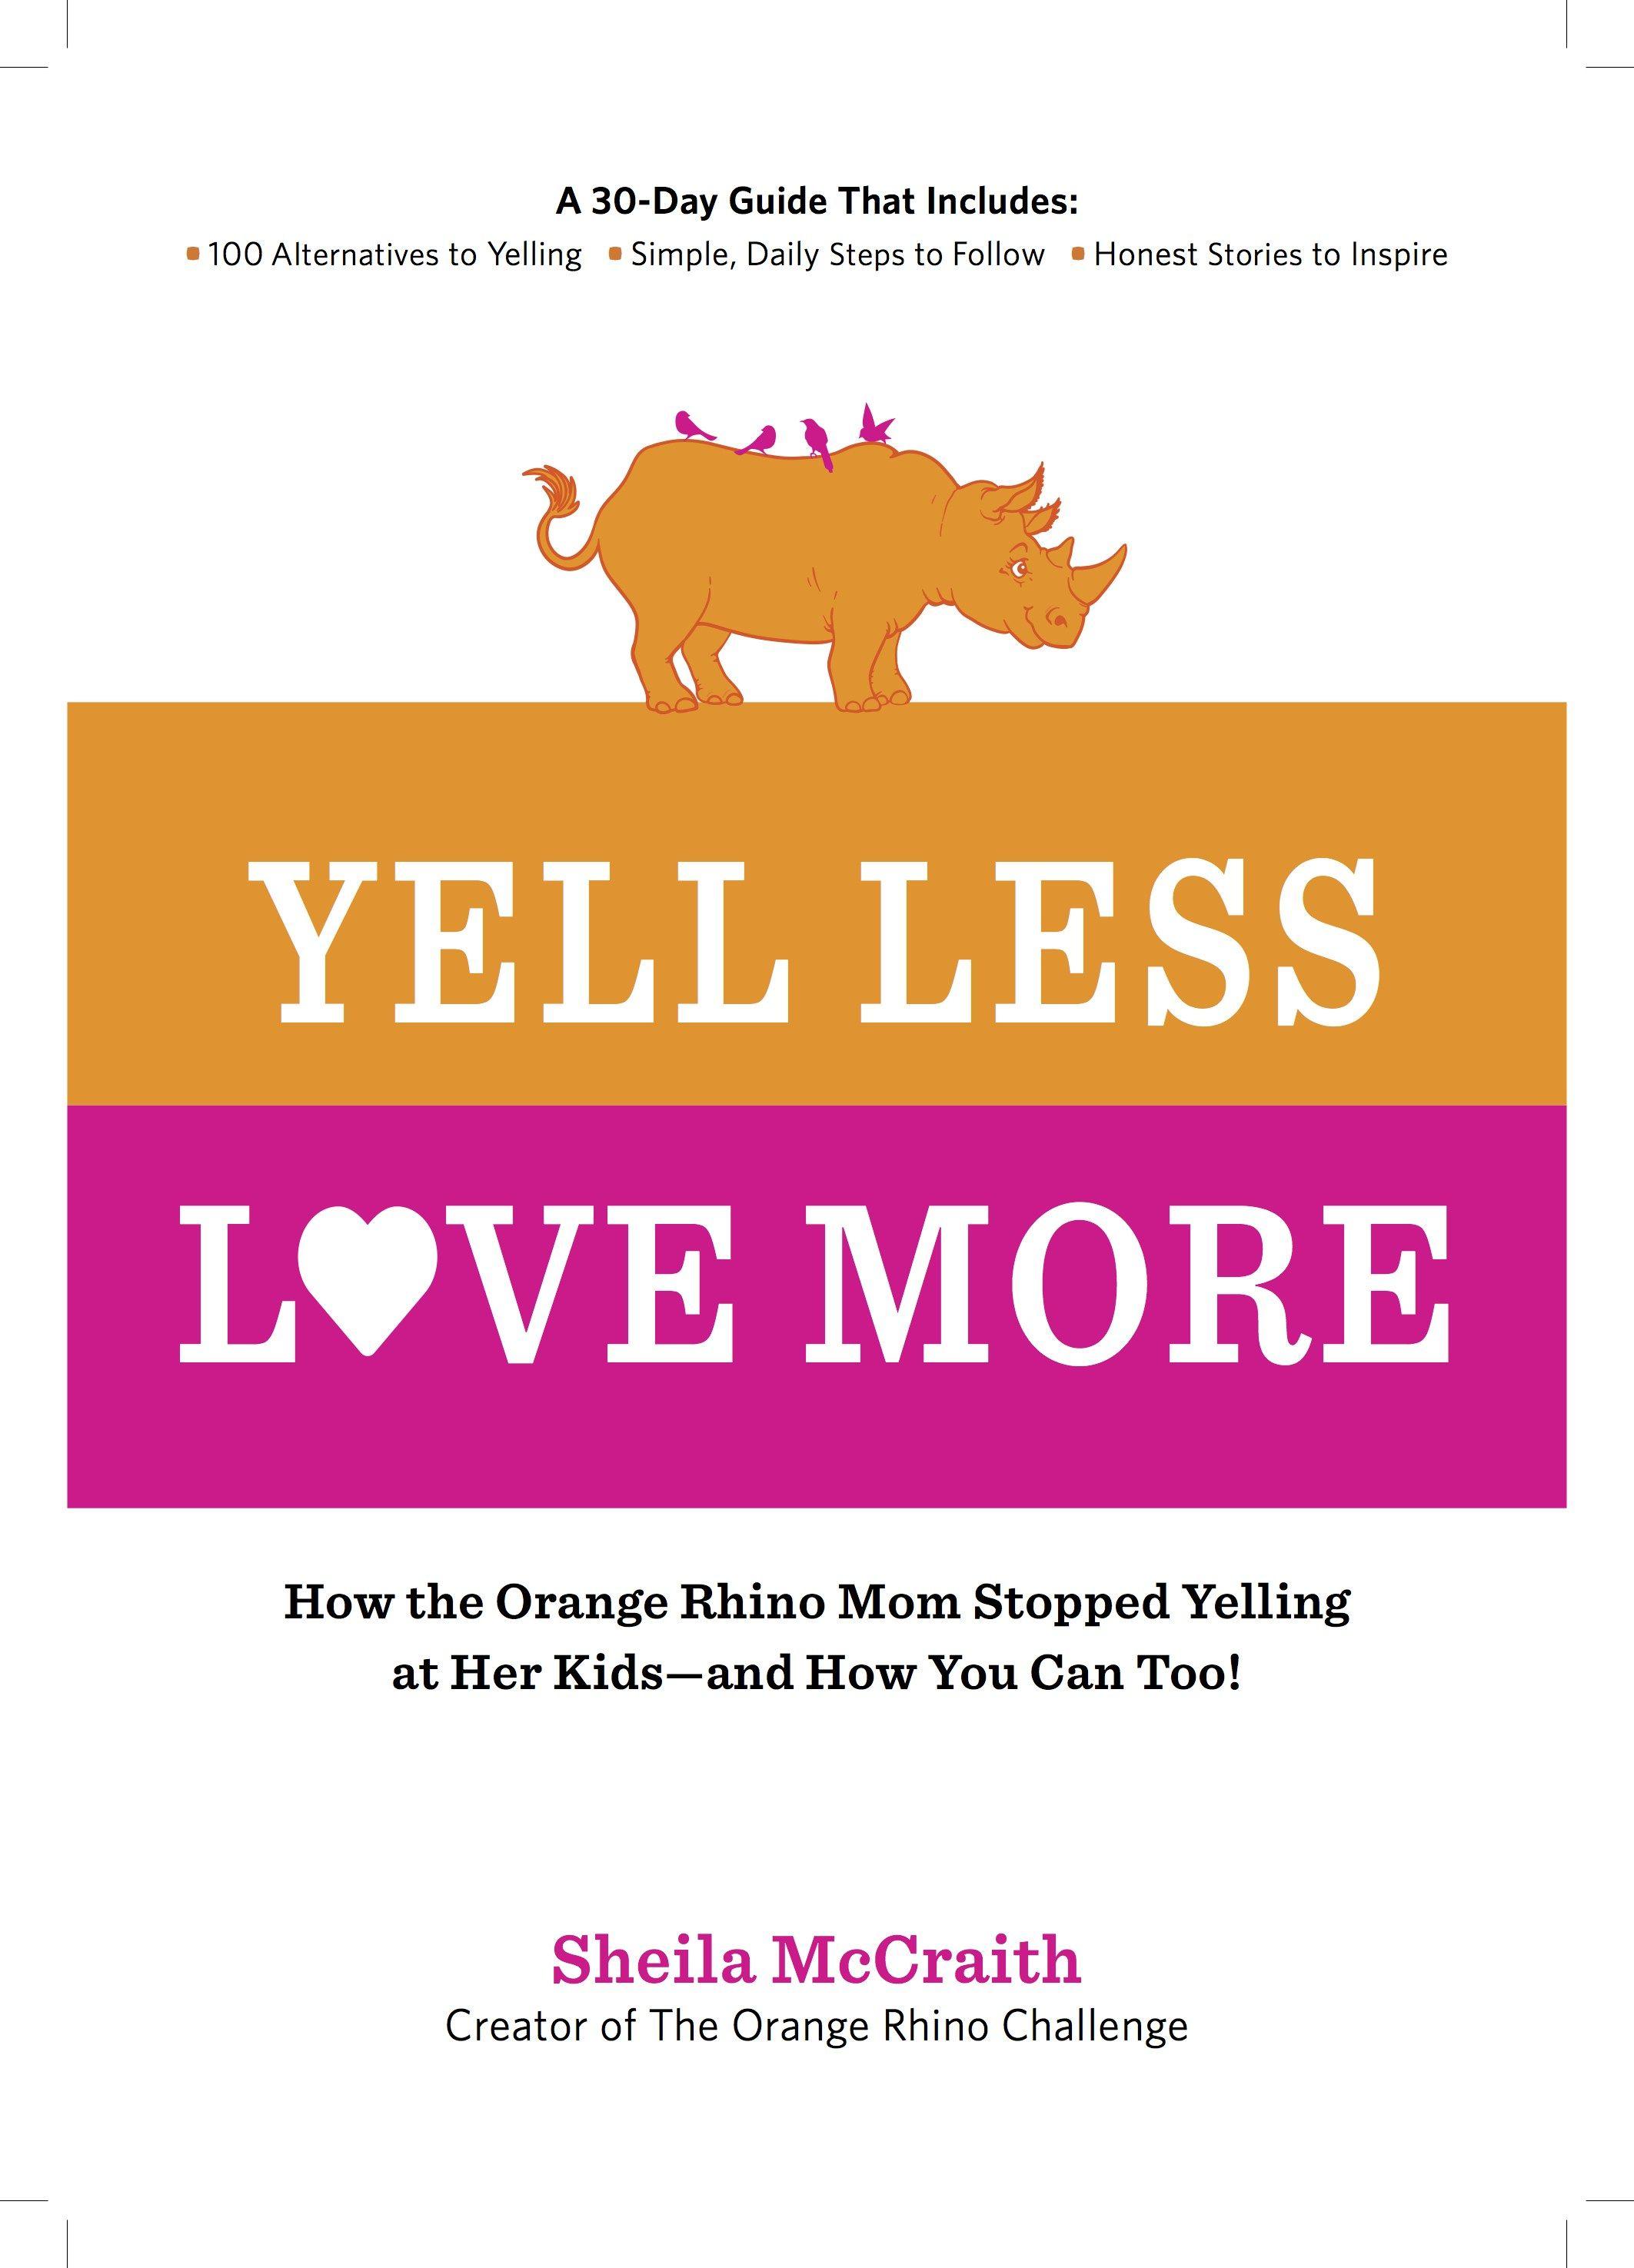 Orange Rhino Logo - Stop Yelling! The Orange Rhino Challenge | MomCave TV